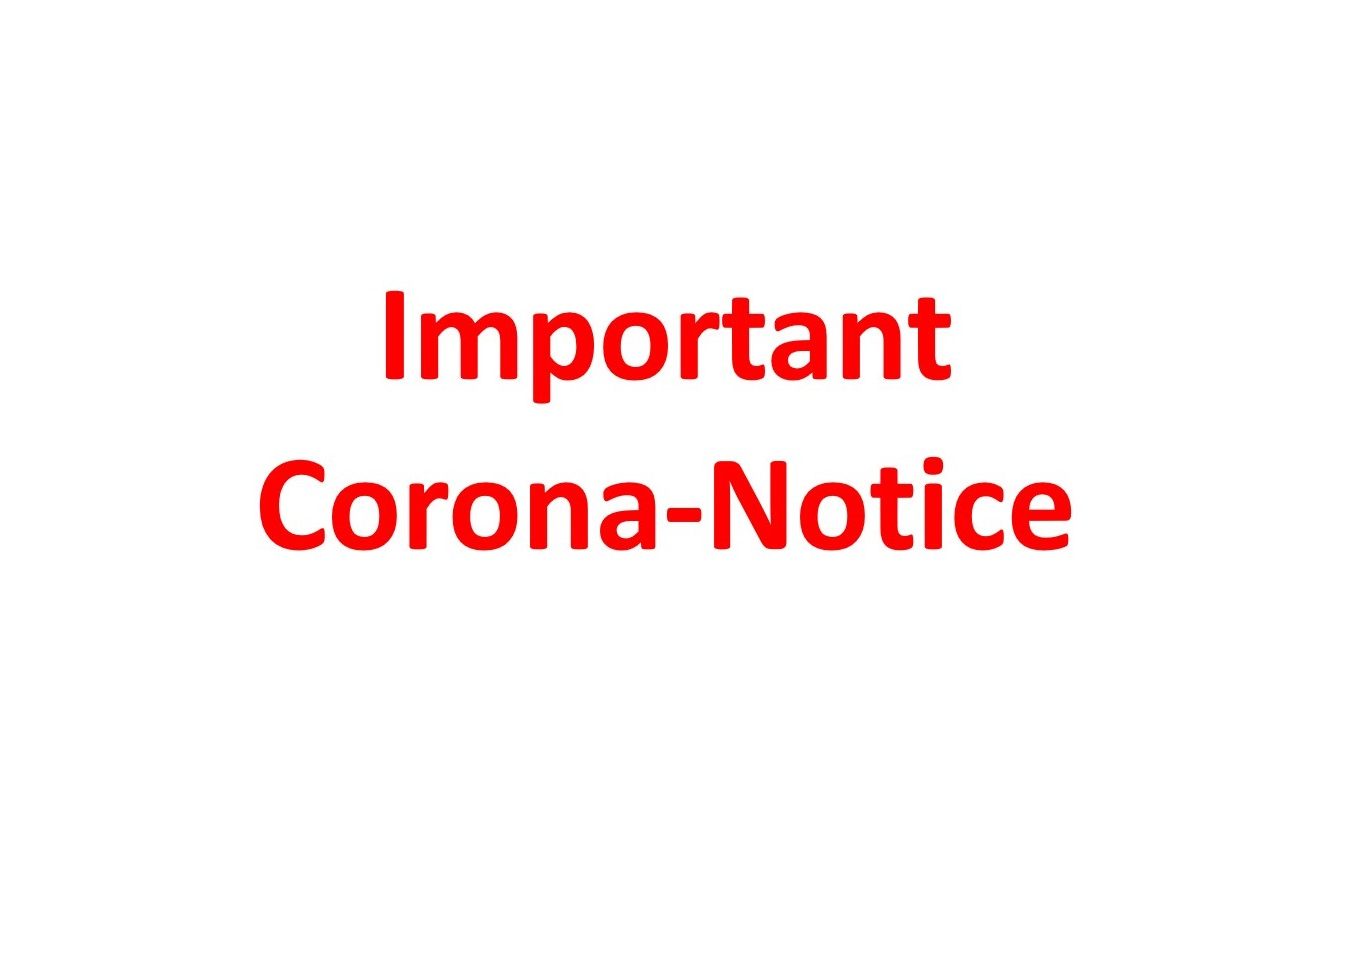 March 2020 - Important Corona-Notice